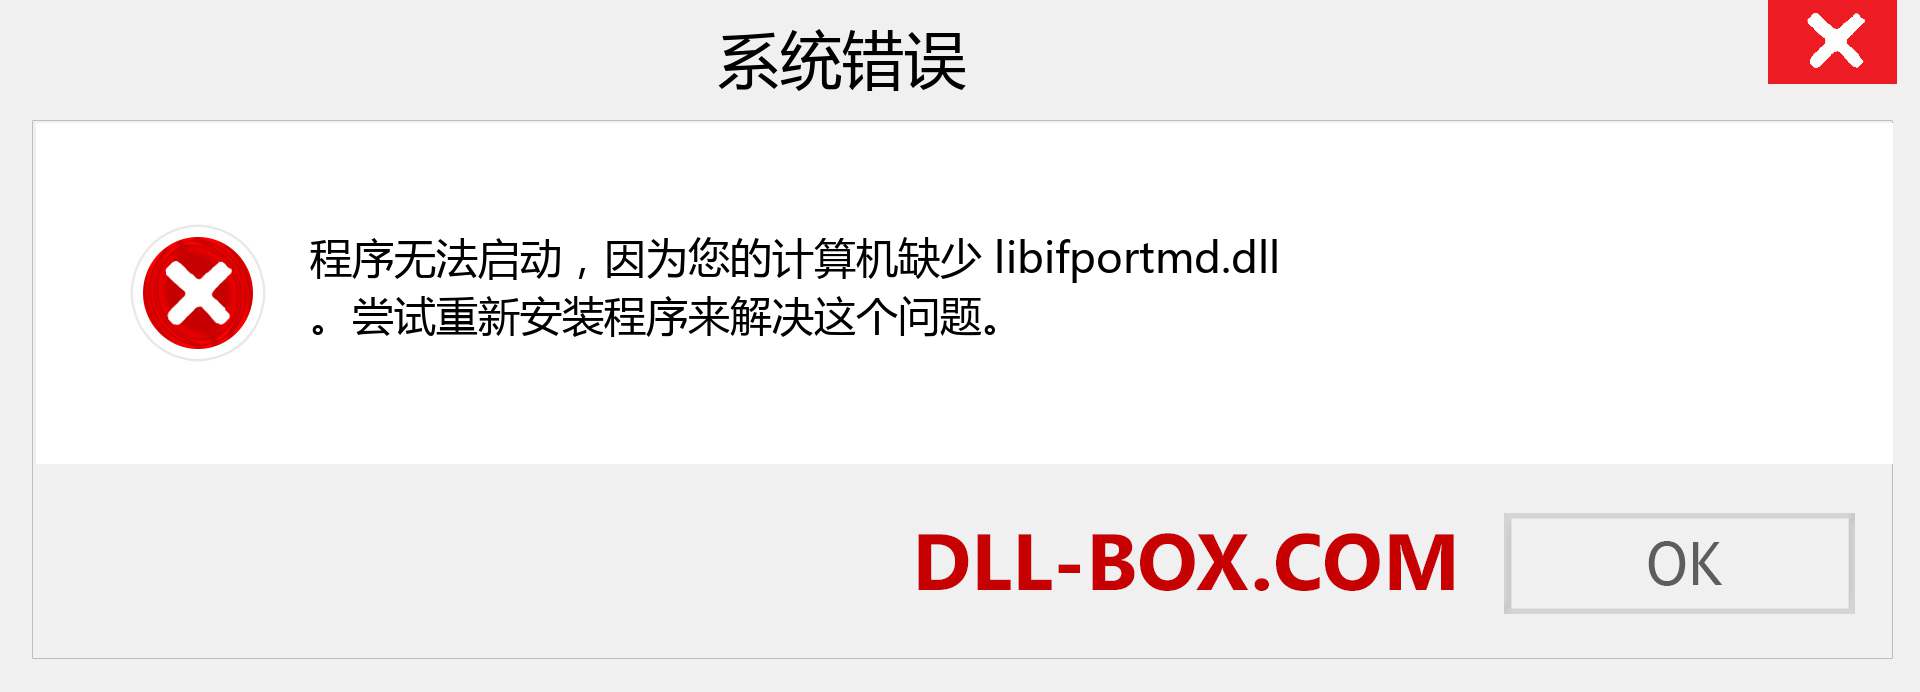 libifportmd.dll 文件丢失？。 适用于 Windows 7、8、10 的下载 - 修复 Windows、照片、图像上的 libifportmd dll 丢失错误